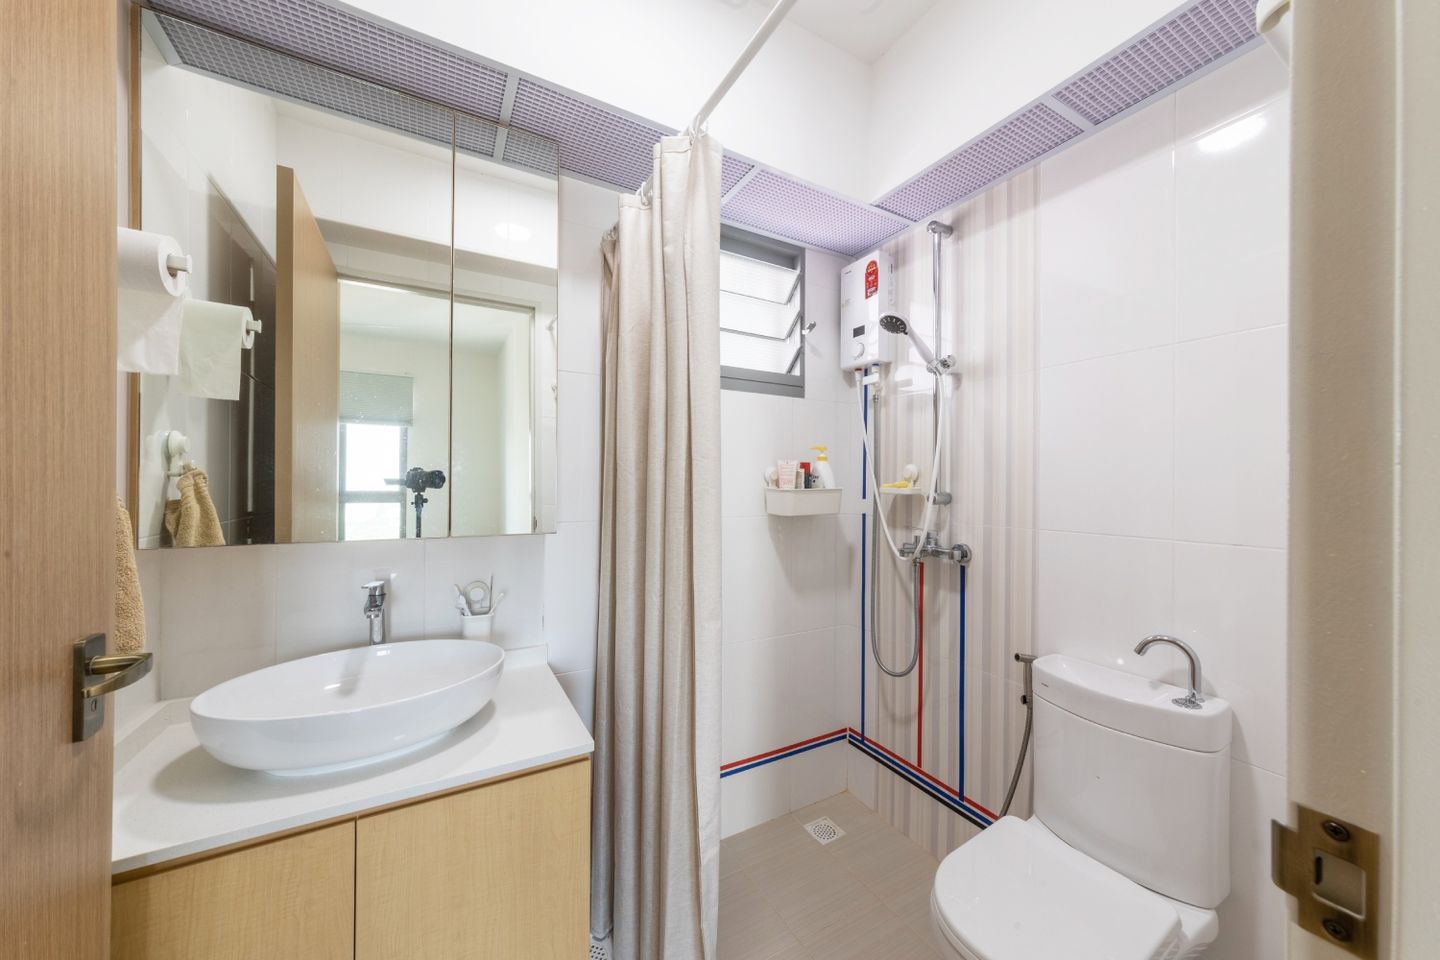 Bathroom Design With White Tiles - Livspace